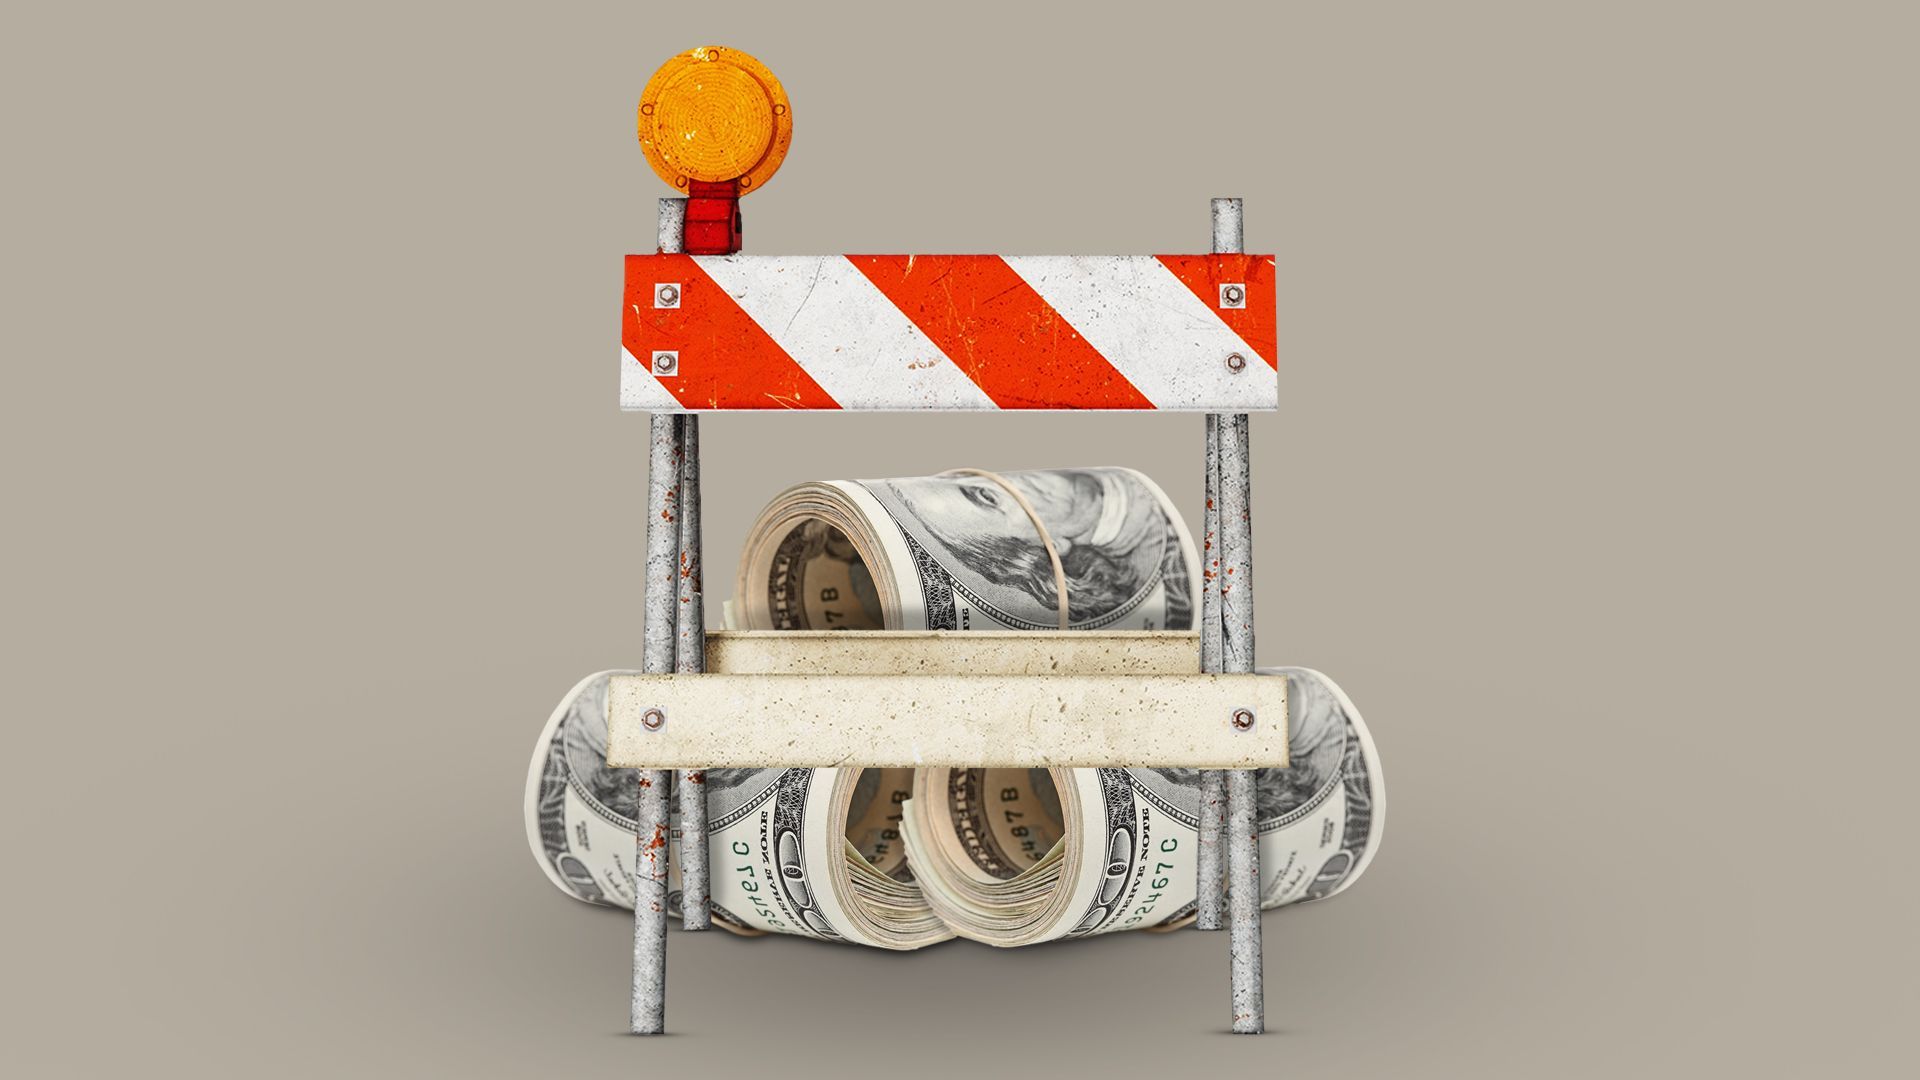 Illustration of rolls of bills behind a road barricade